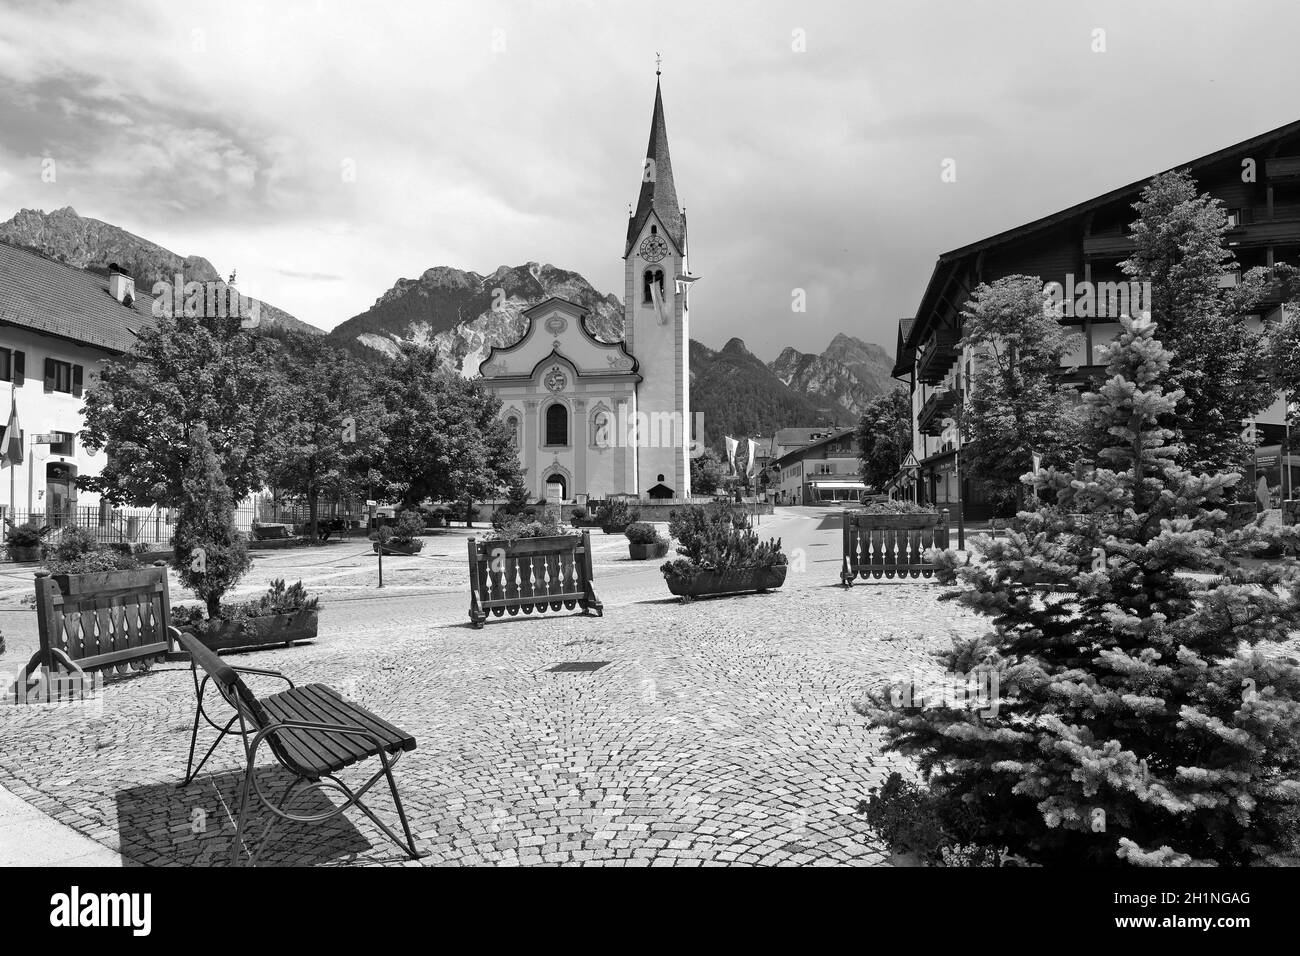 Dorfplatz mit Kirche 'Zum Heiligen Vigilius' in 's.t. Vigil in Enneberg' Südtirol-Italien. Italienisch: Parrocchia di San Vigilio di Marebbe. Die Spätb Foto Stock